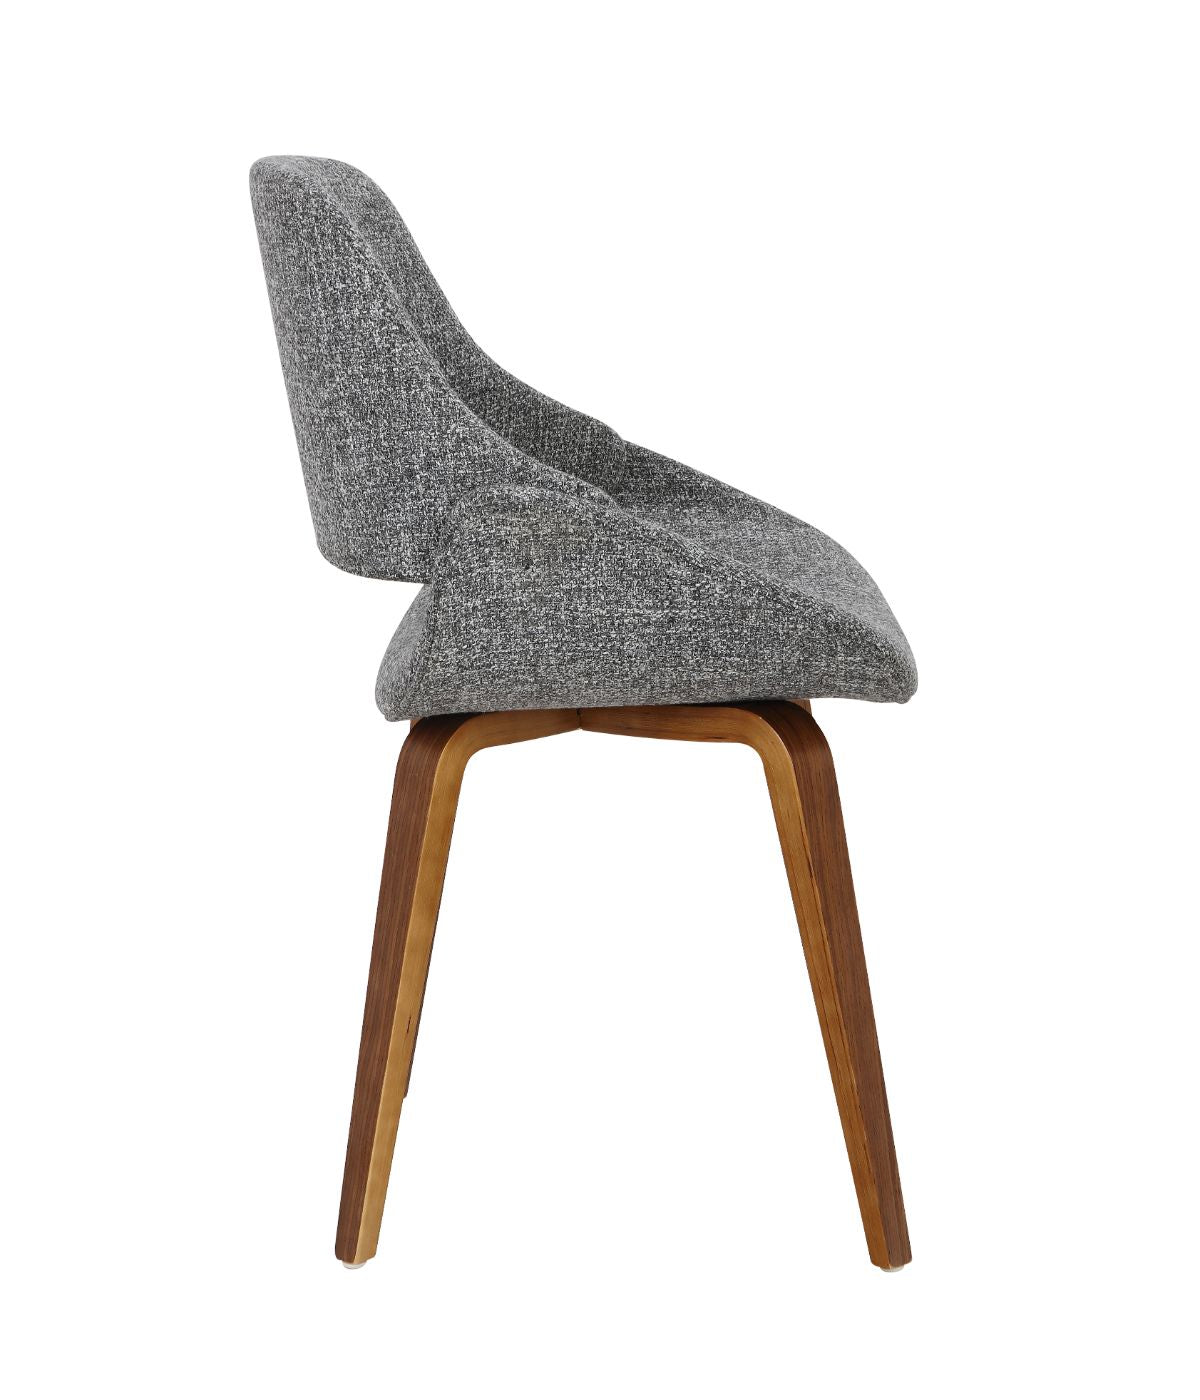 Fabrico Chair - Set of 2 Walnut & Grey